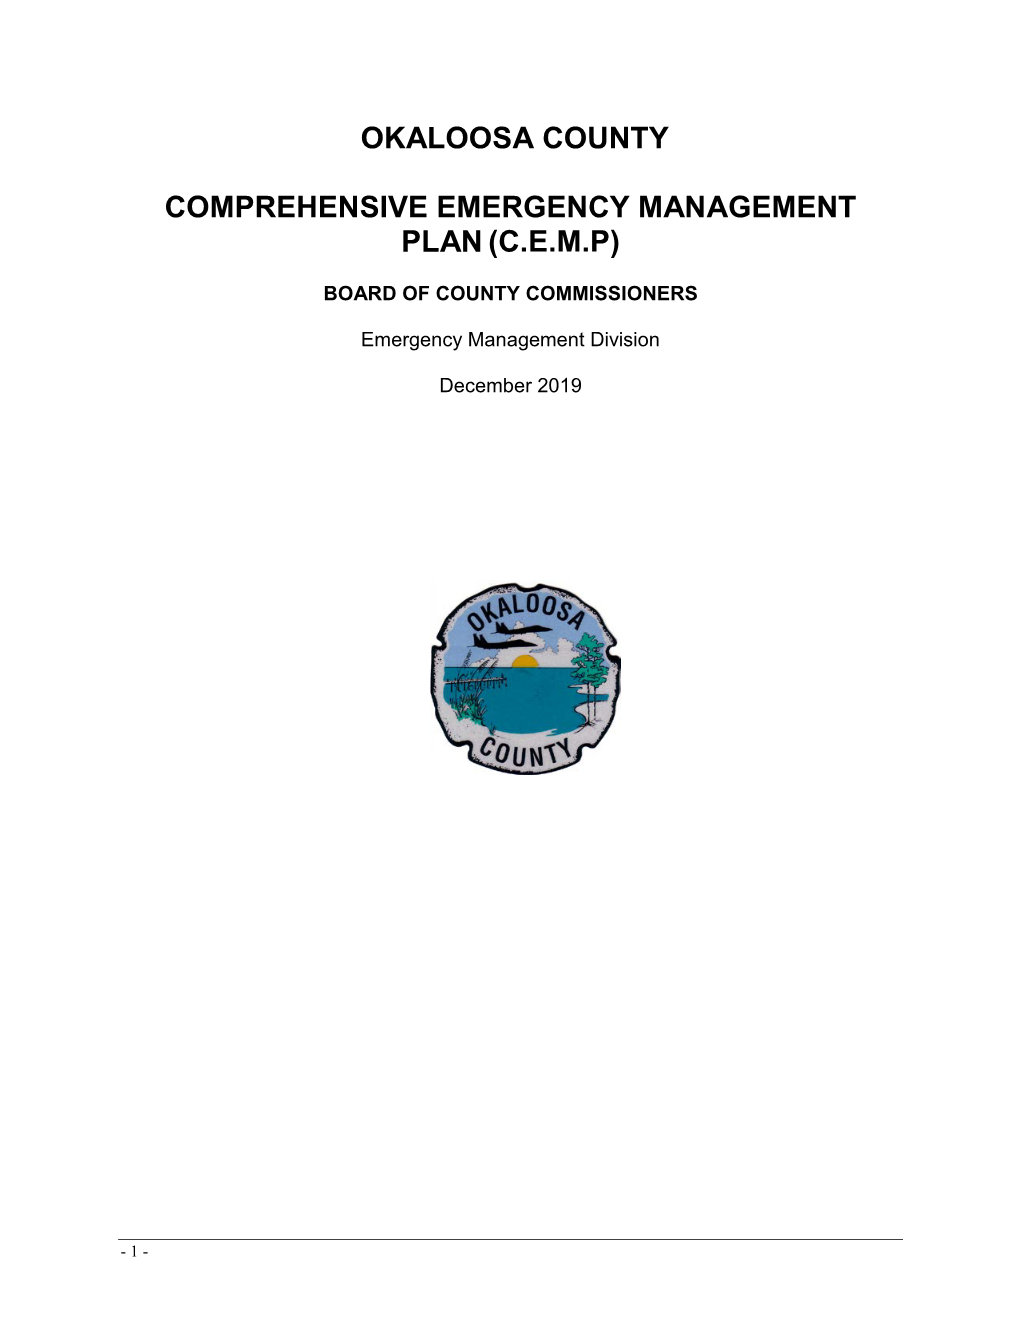 Okaloosa County Comprehensive Emergency Management Plan(Cemp)